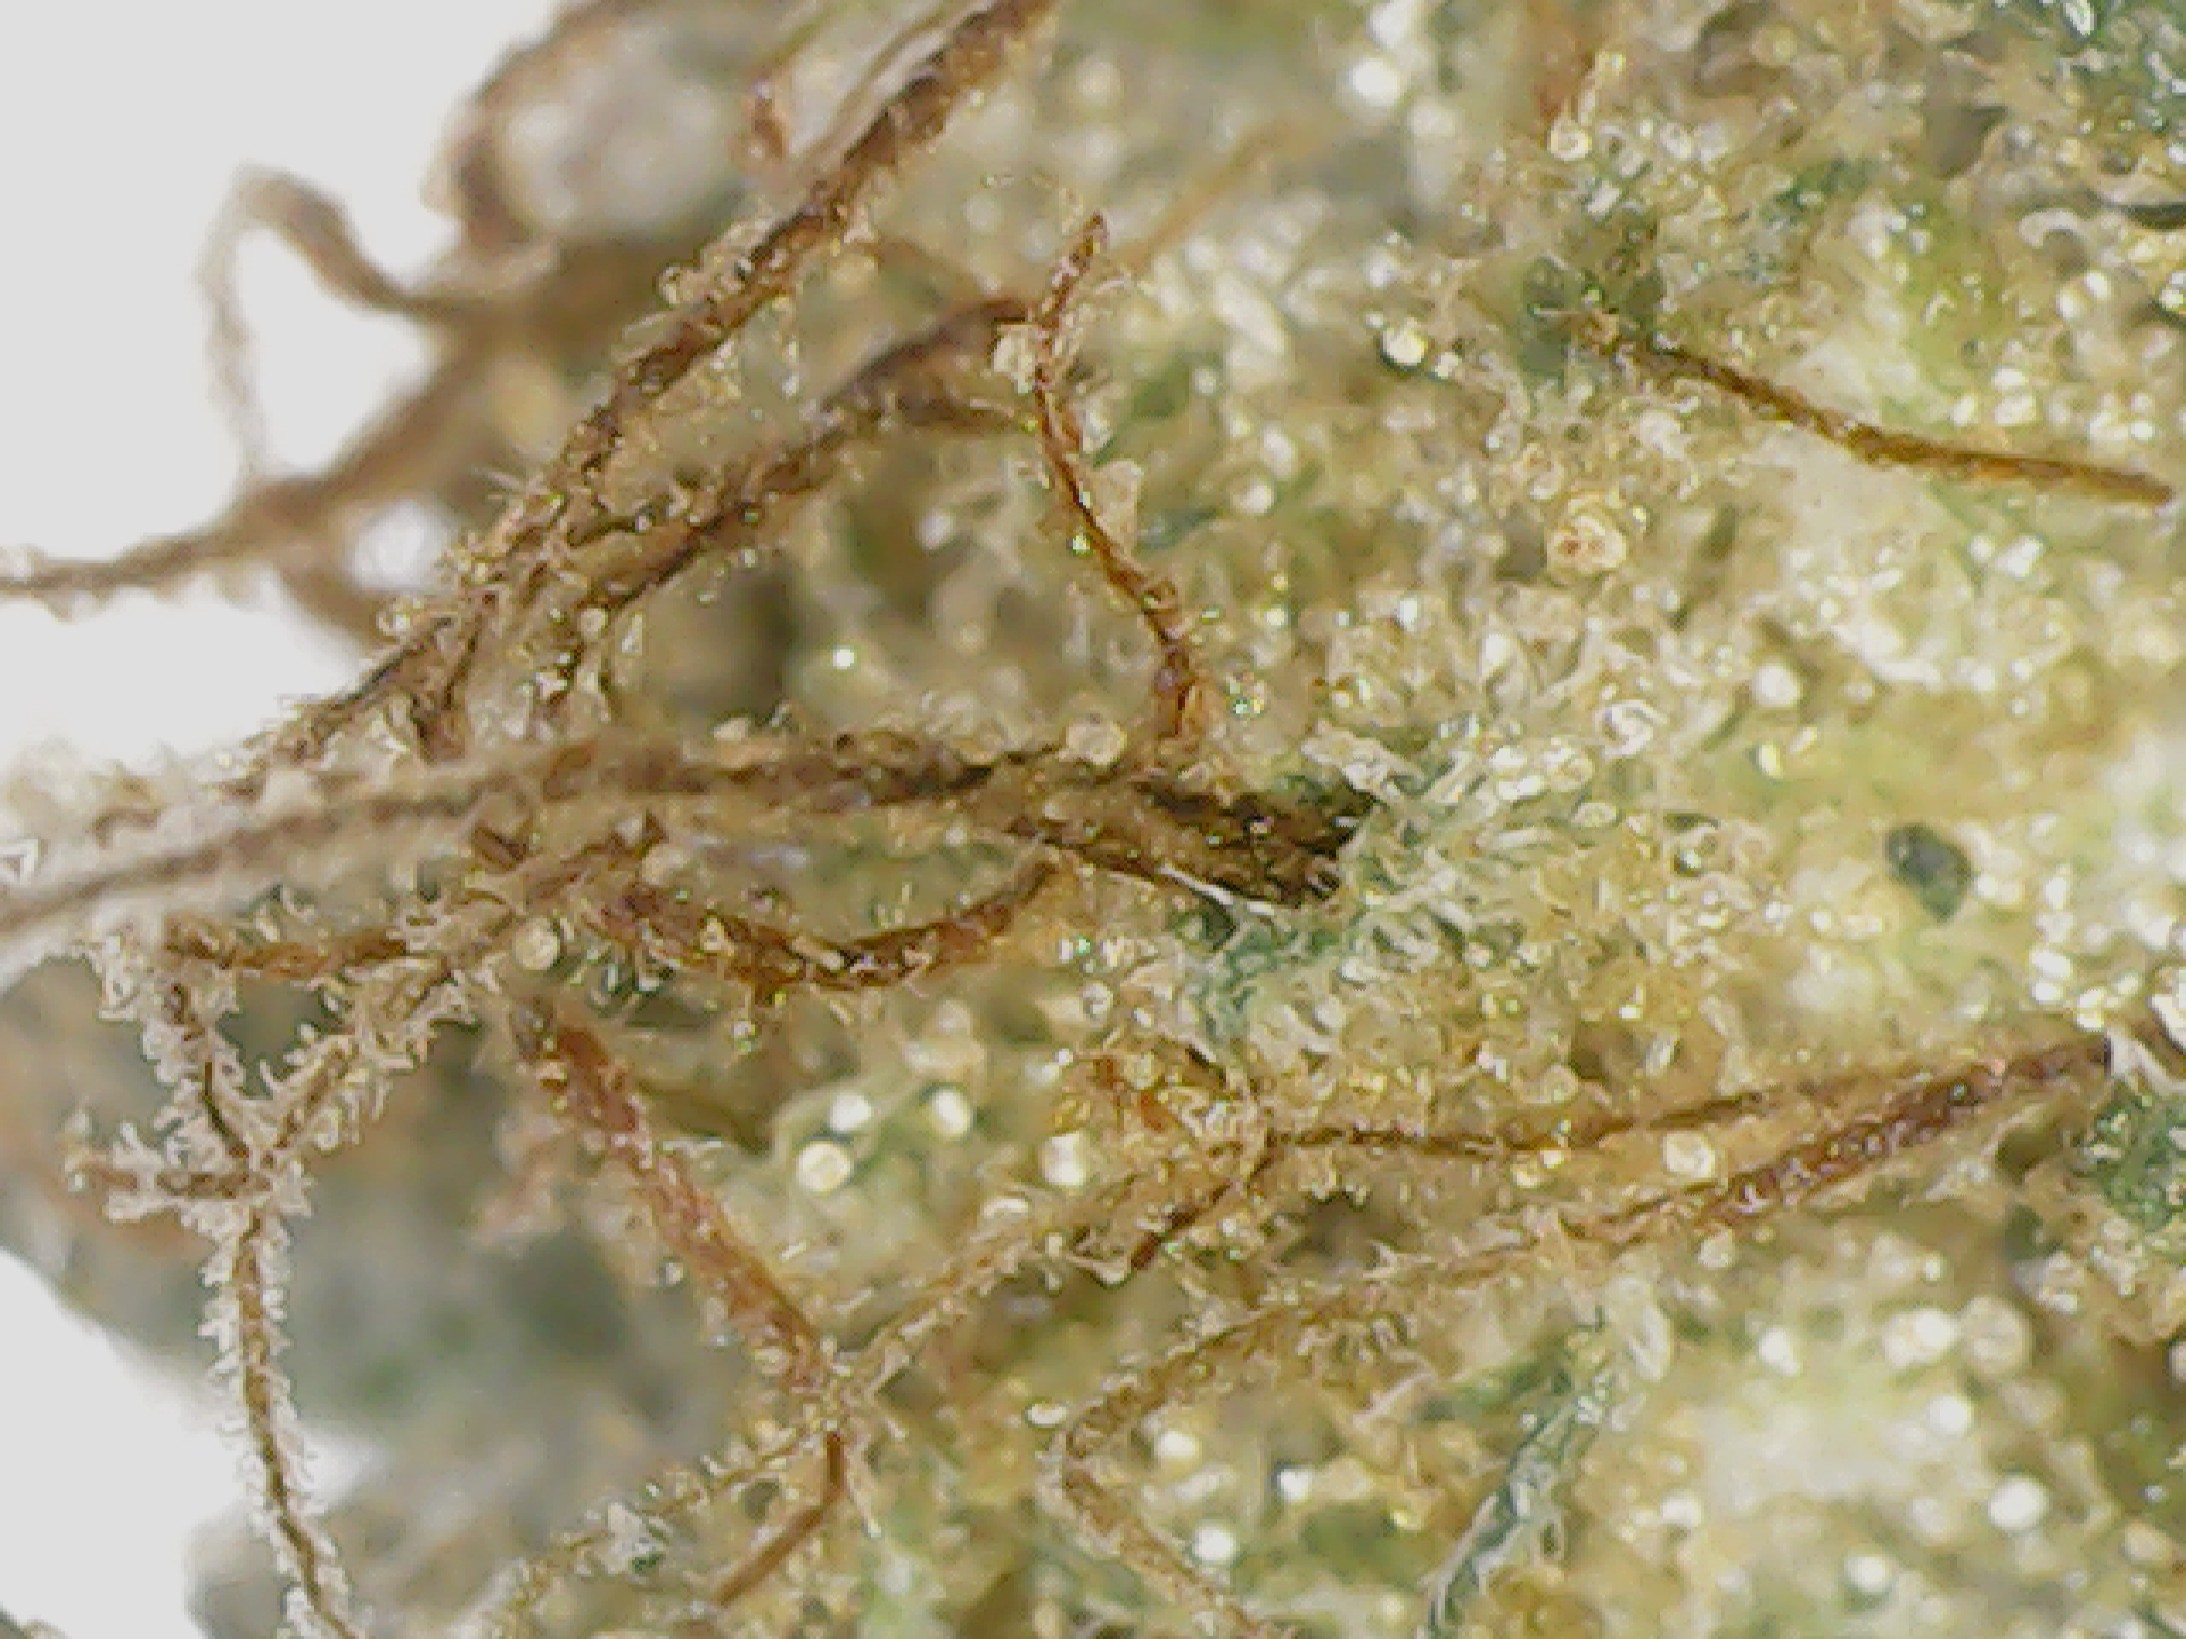 Atlantic Glue GG4 by Reef Organic Cannabis Indica Cultivar Photos Weed Strain Review by Stash Magazine Canada's Cannabis Lookbook Volume 3 - stashmagazine.ca